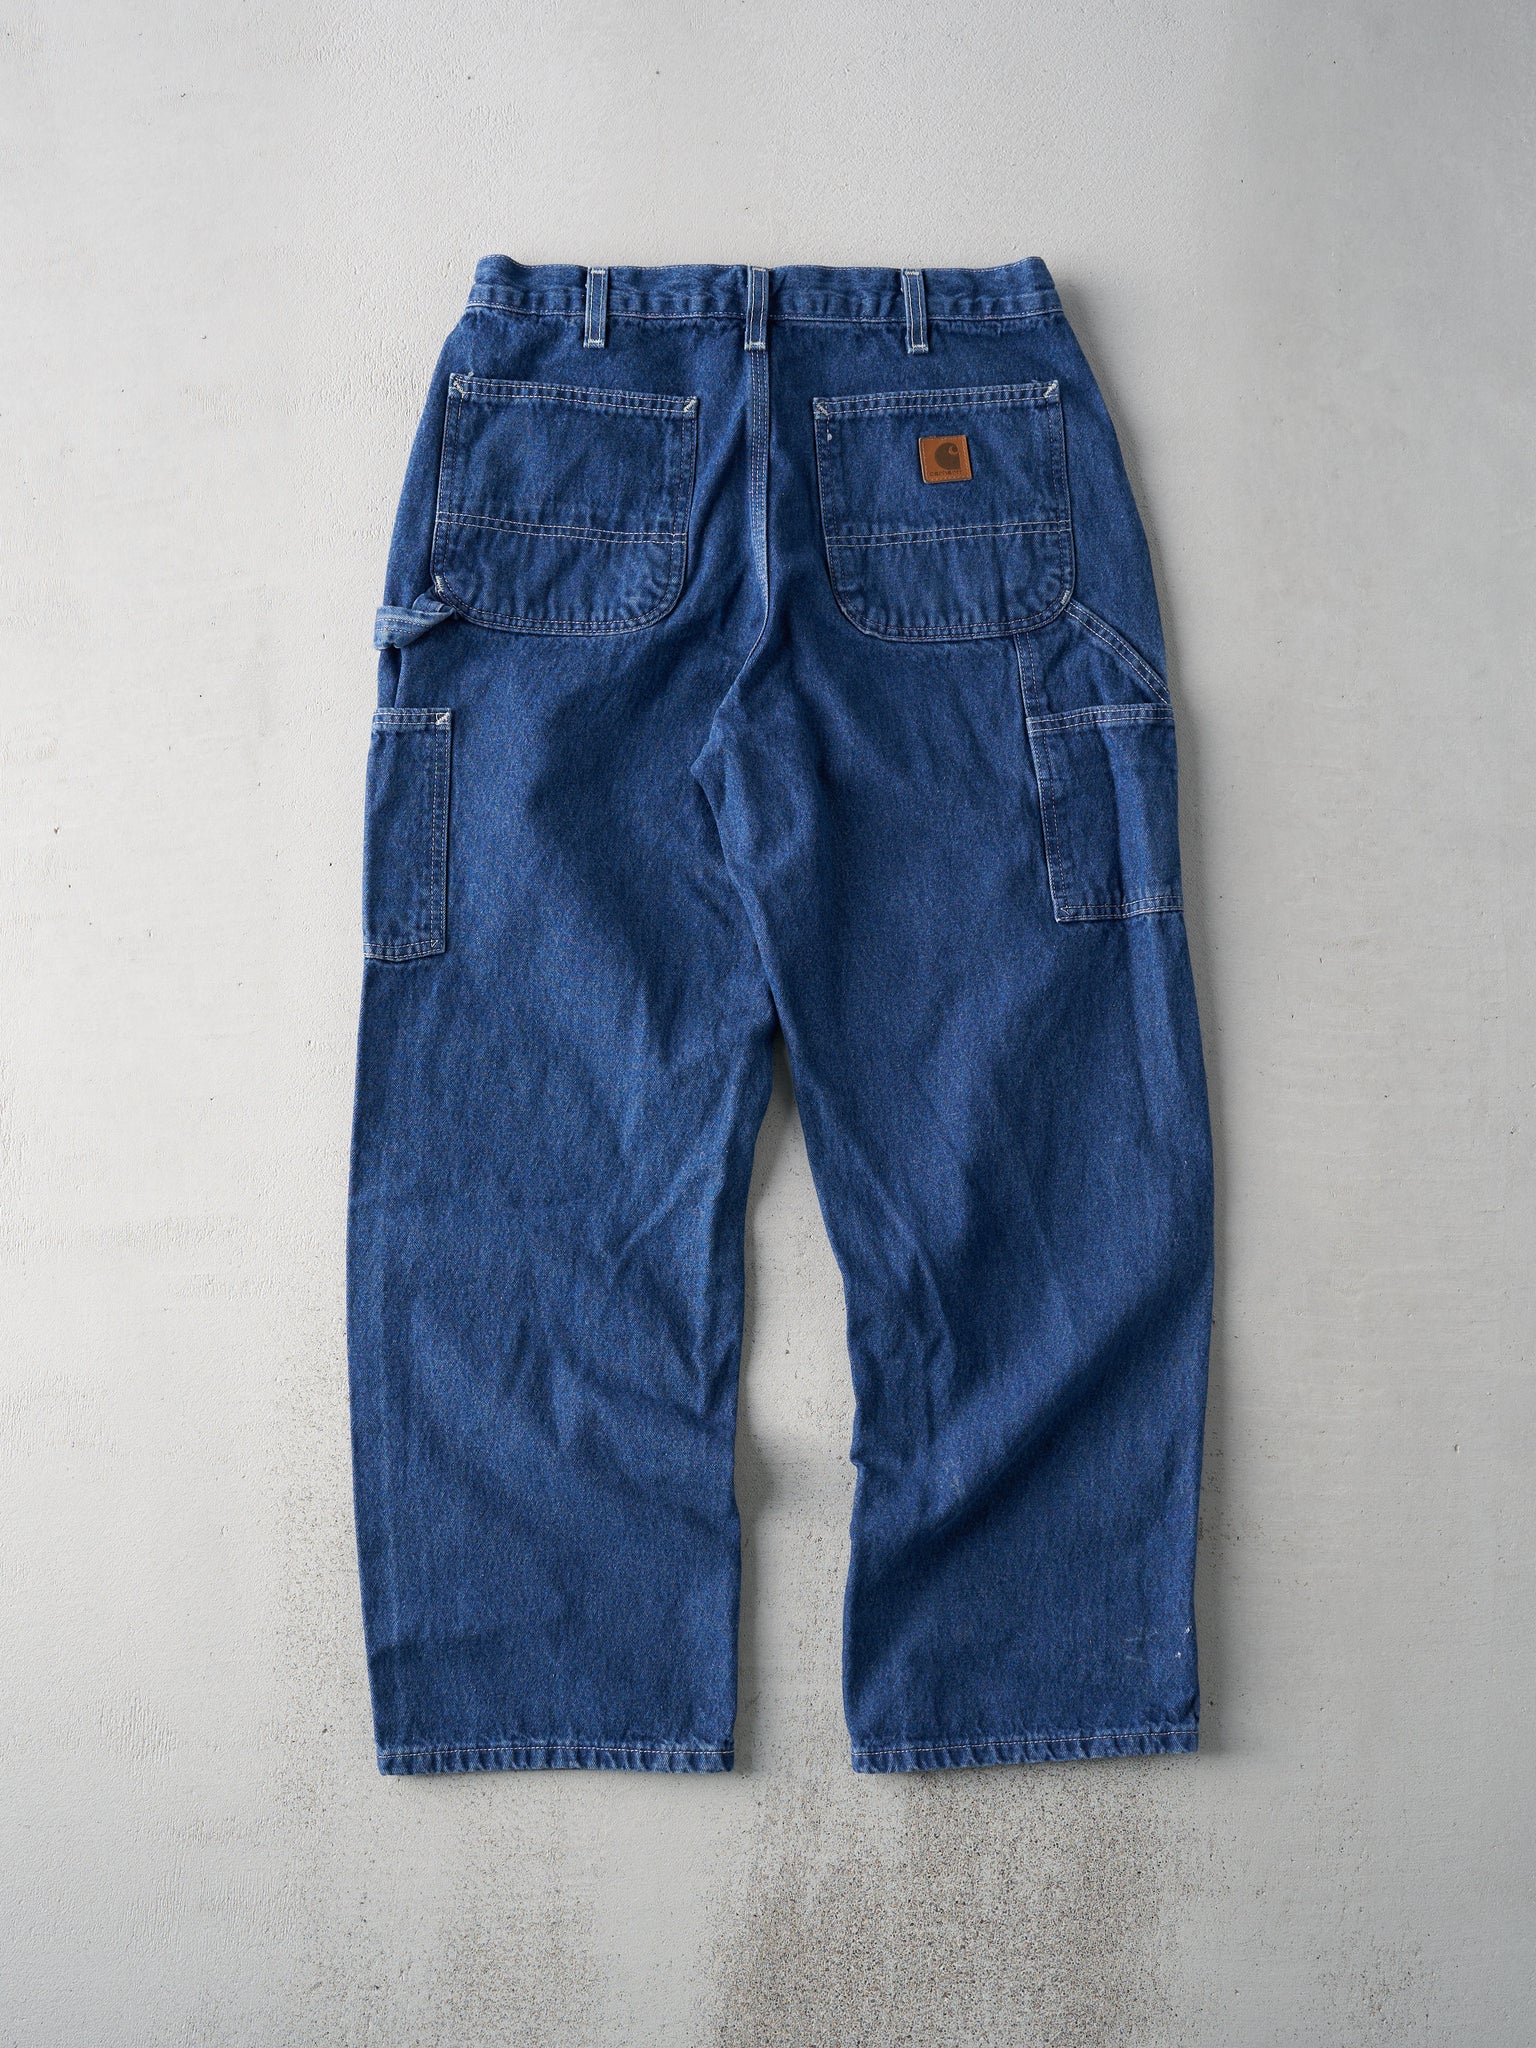 Vintage Y2K Dark Wash Carhartt Dungaree Carpenter Pants (32x29)